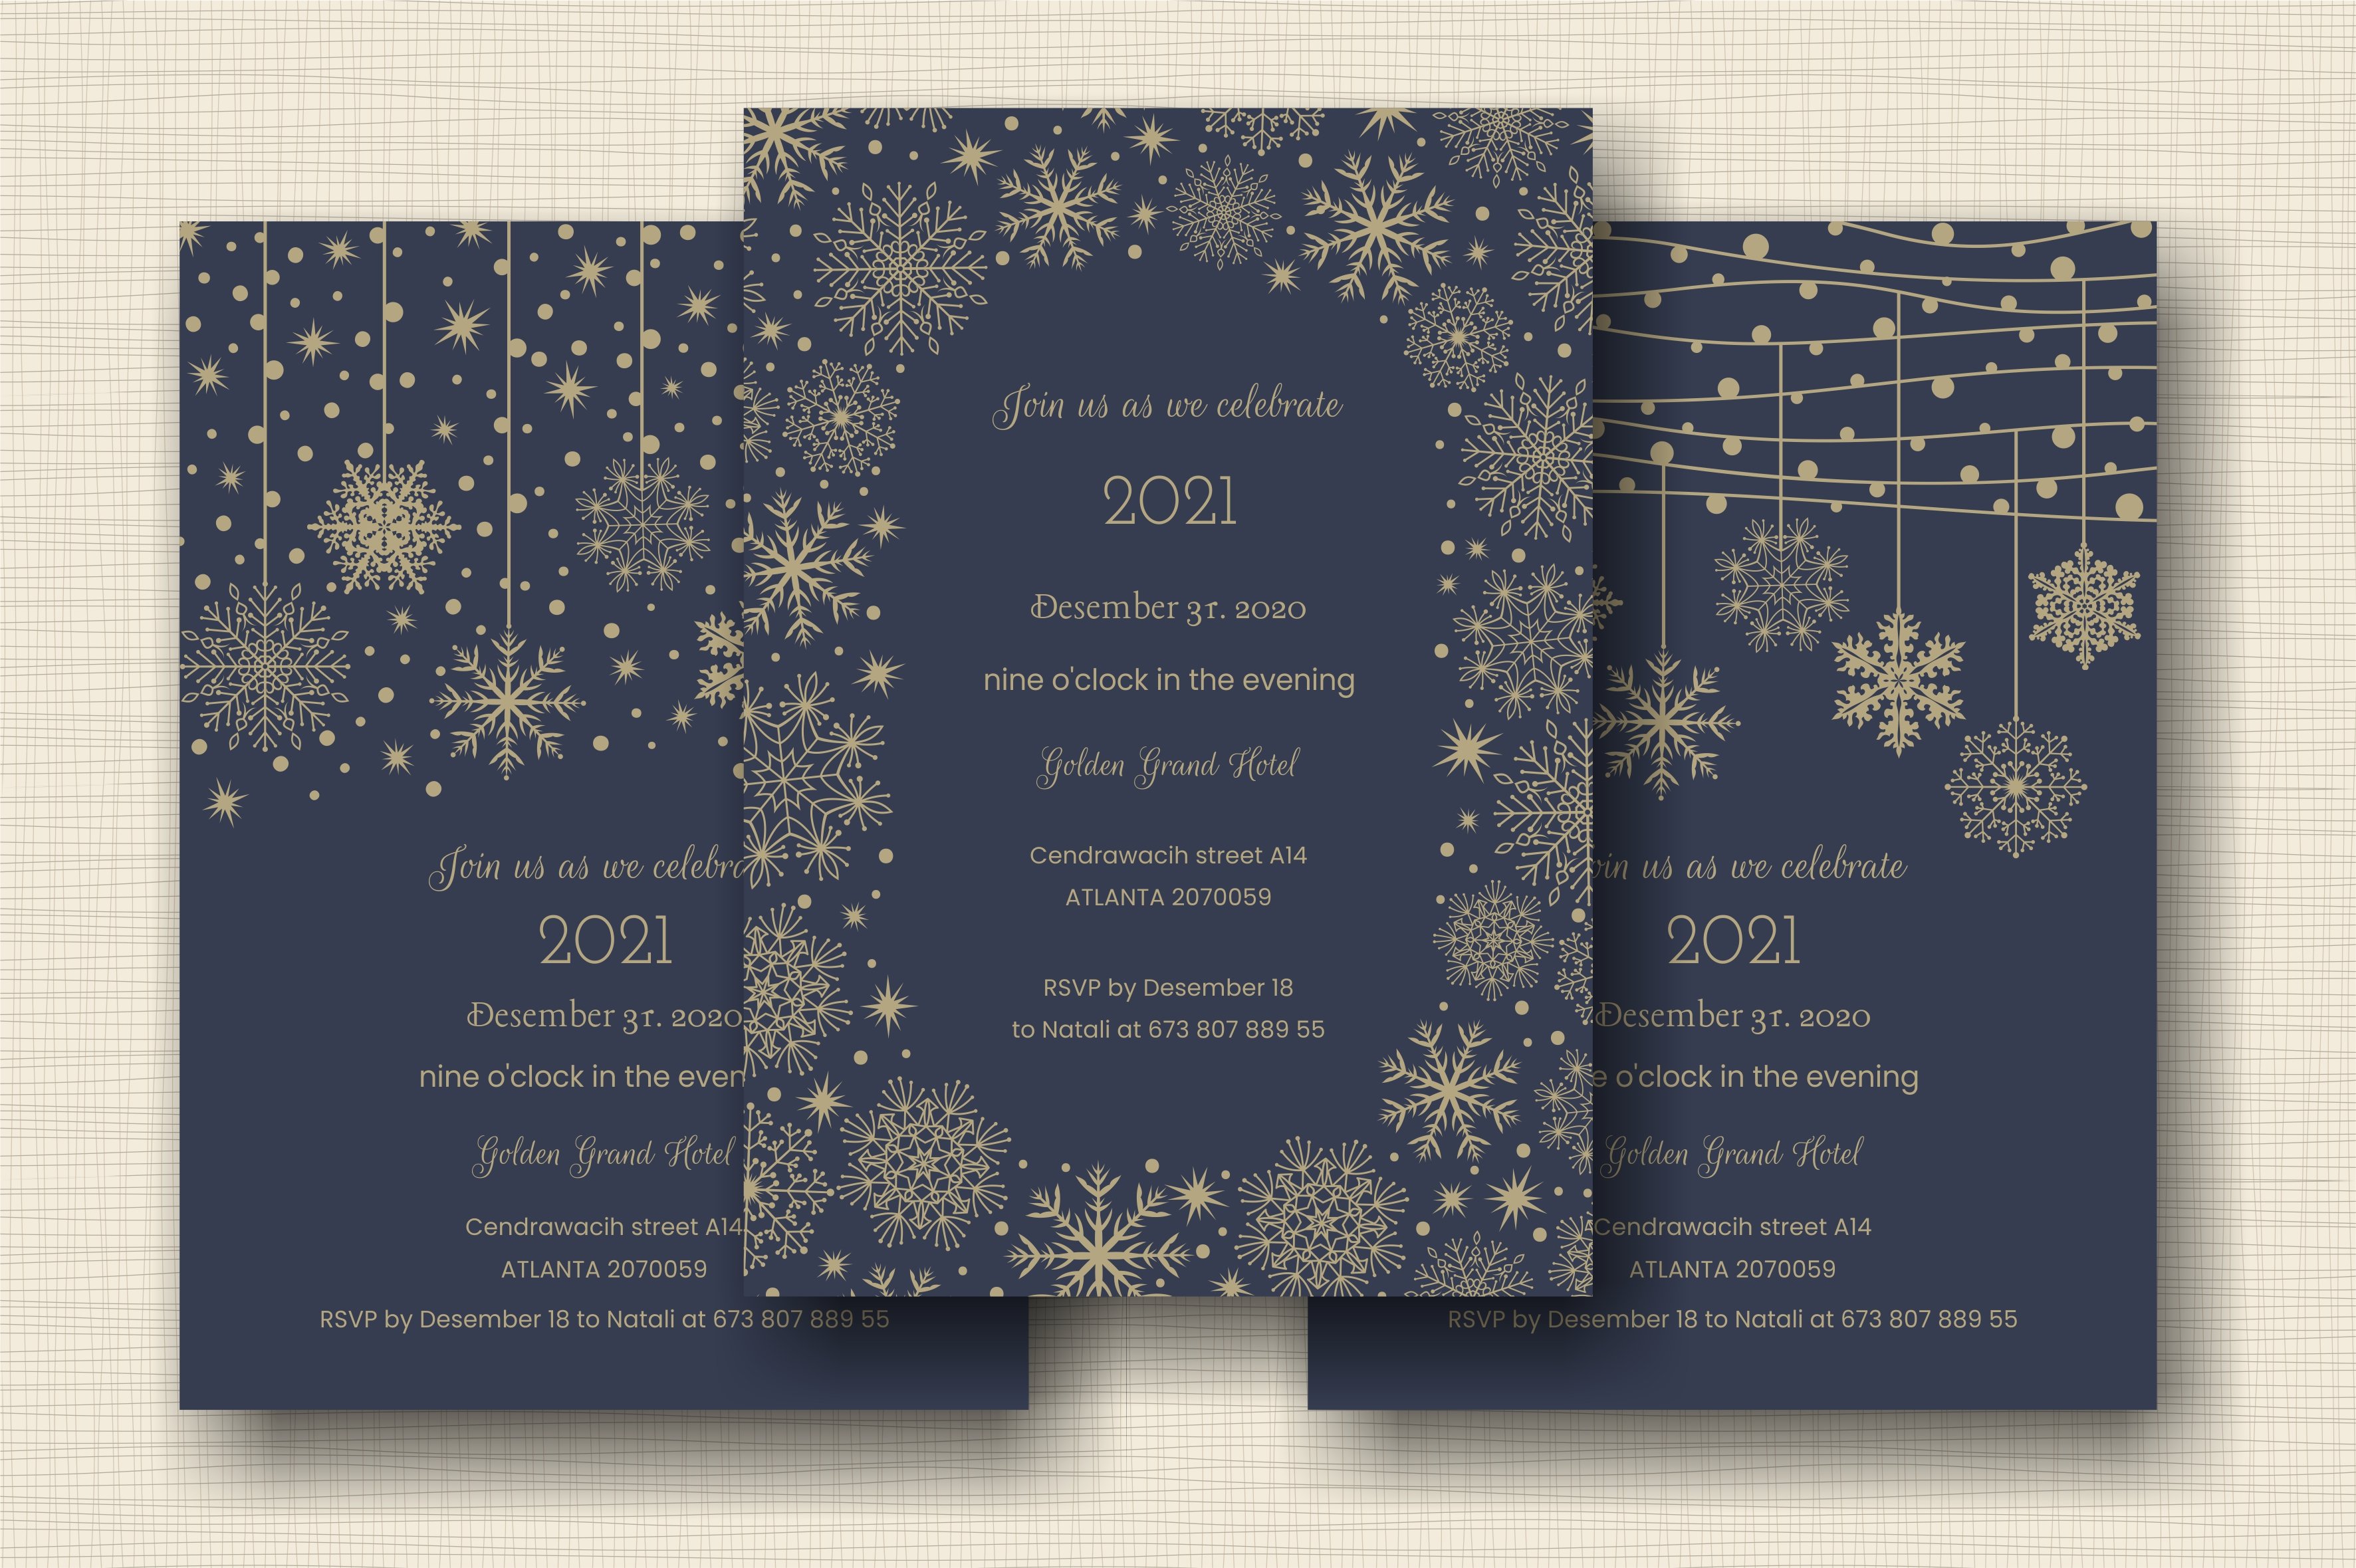 New year invitation set cover image.